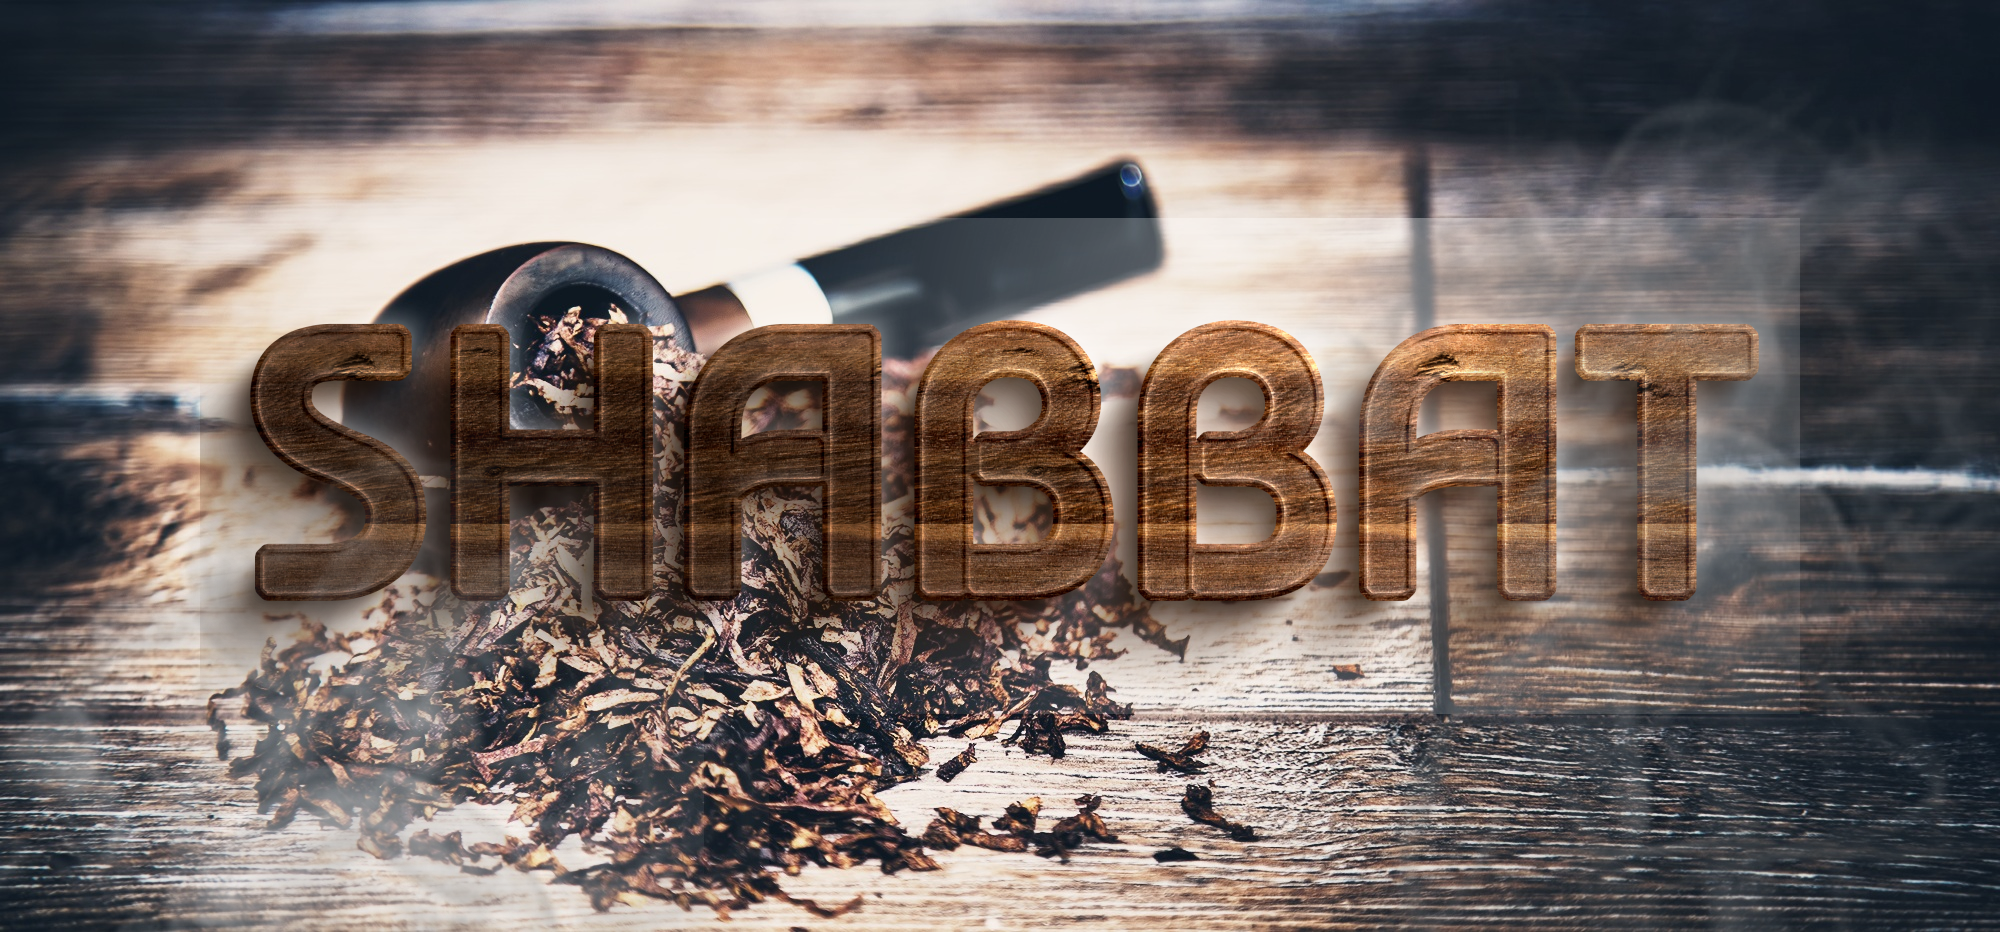 Shabbat Bar Soap